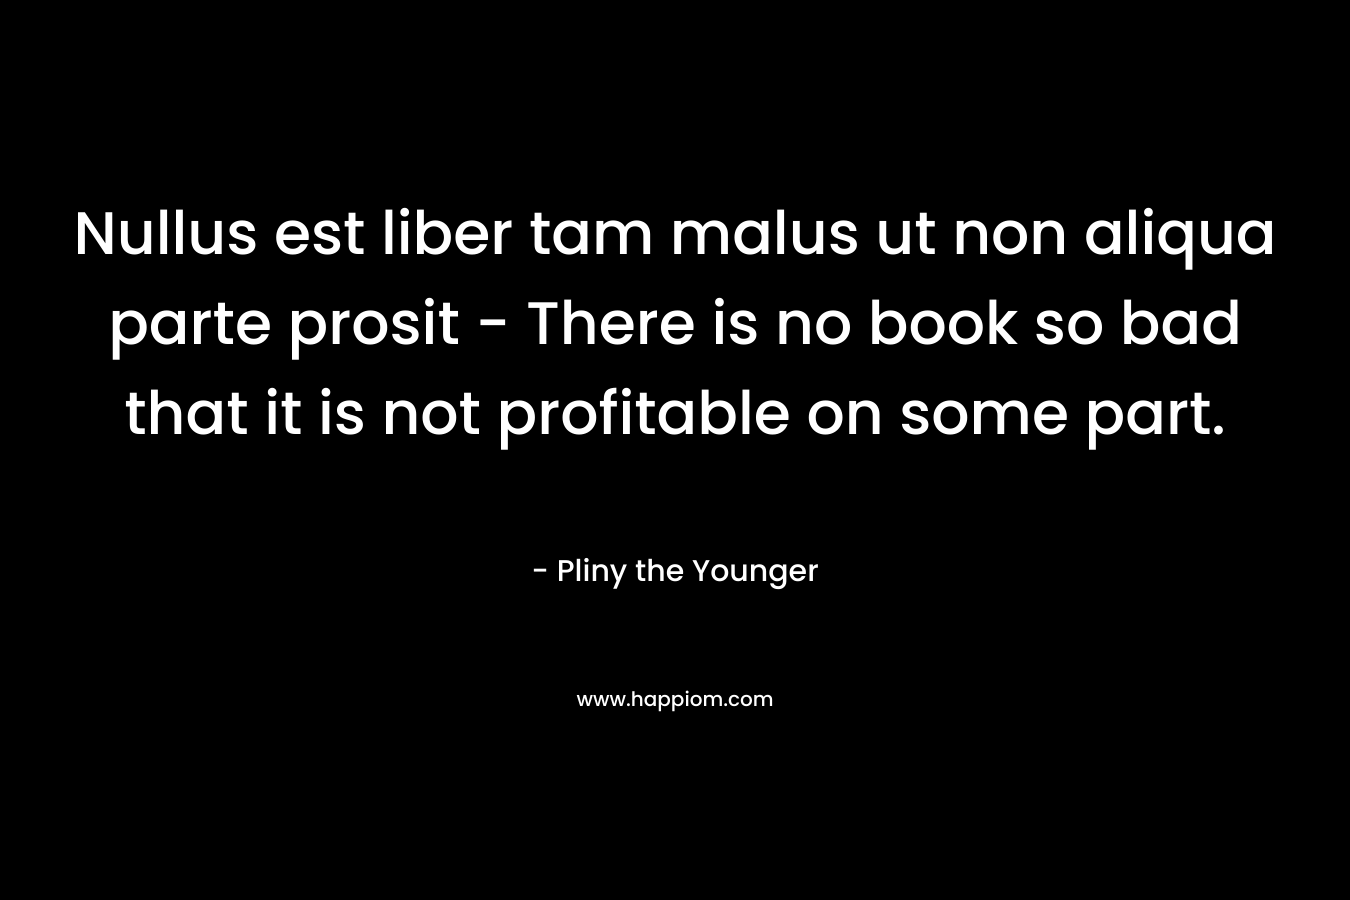 Nullus est liber tam malus ut non aliqua parte prosit - There is no book so bad that it is not profitable on some part.